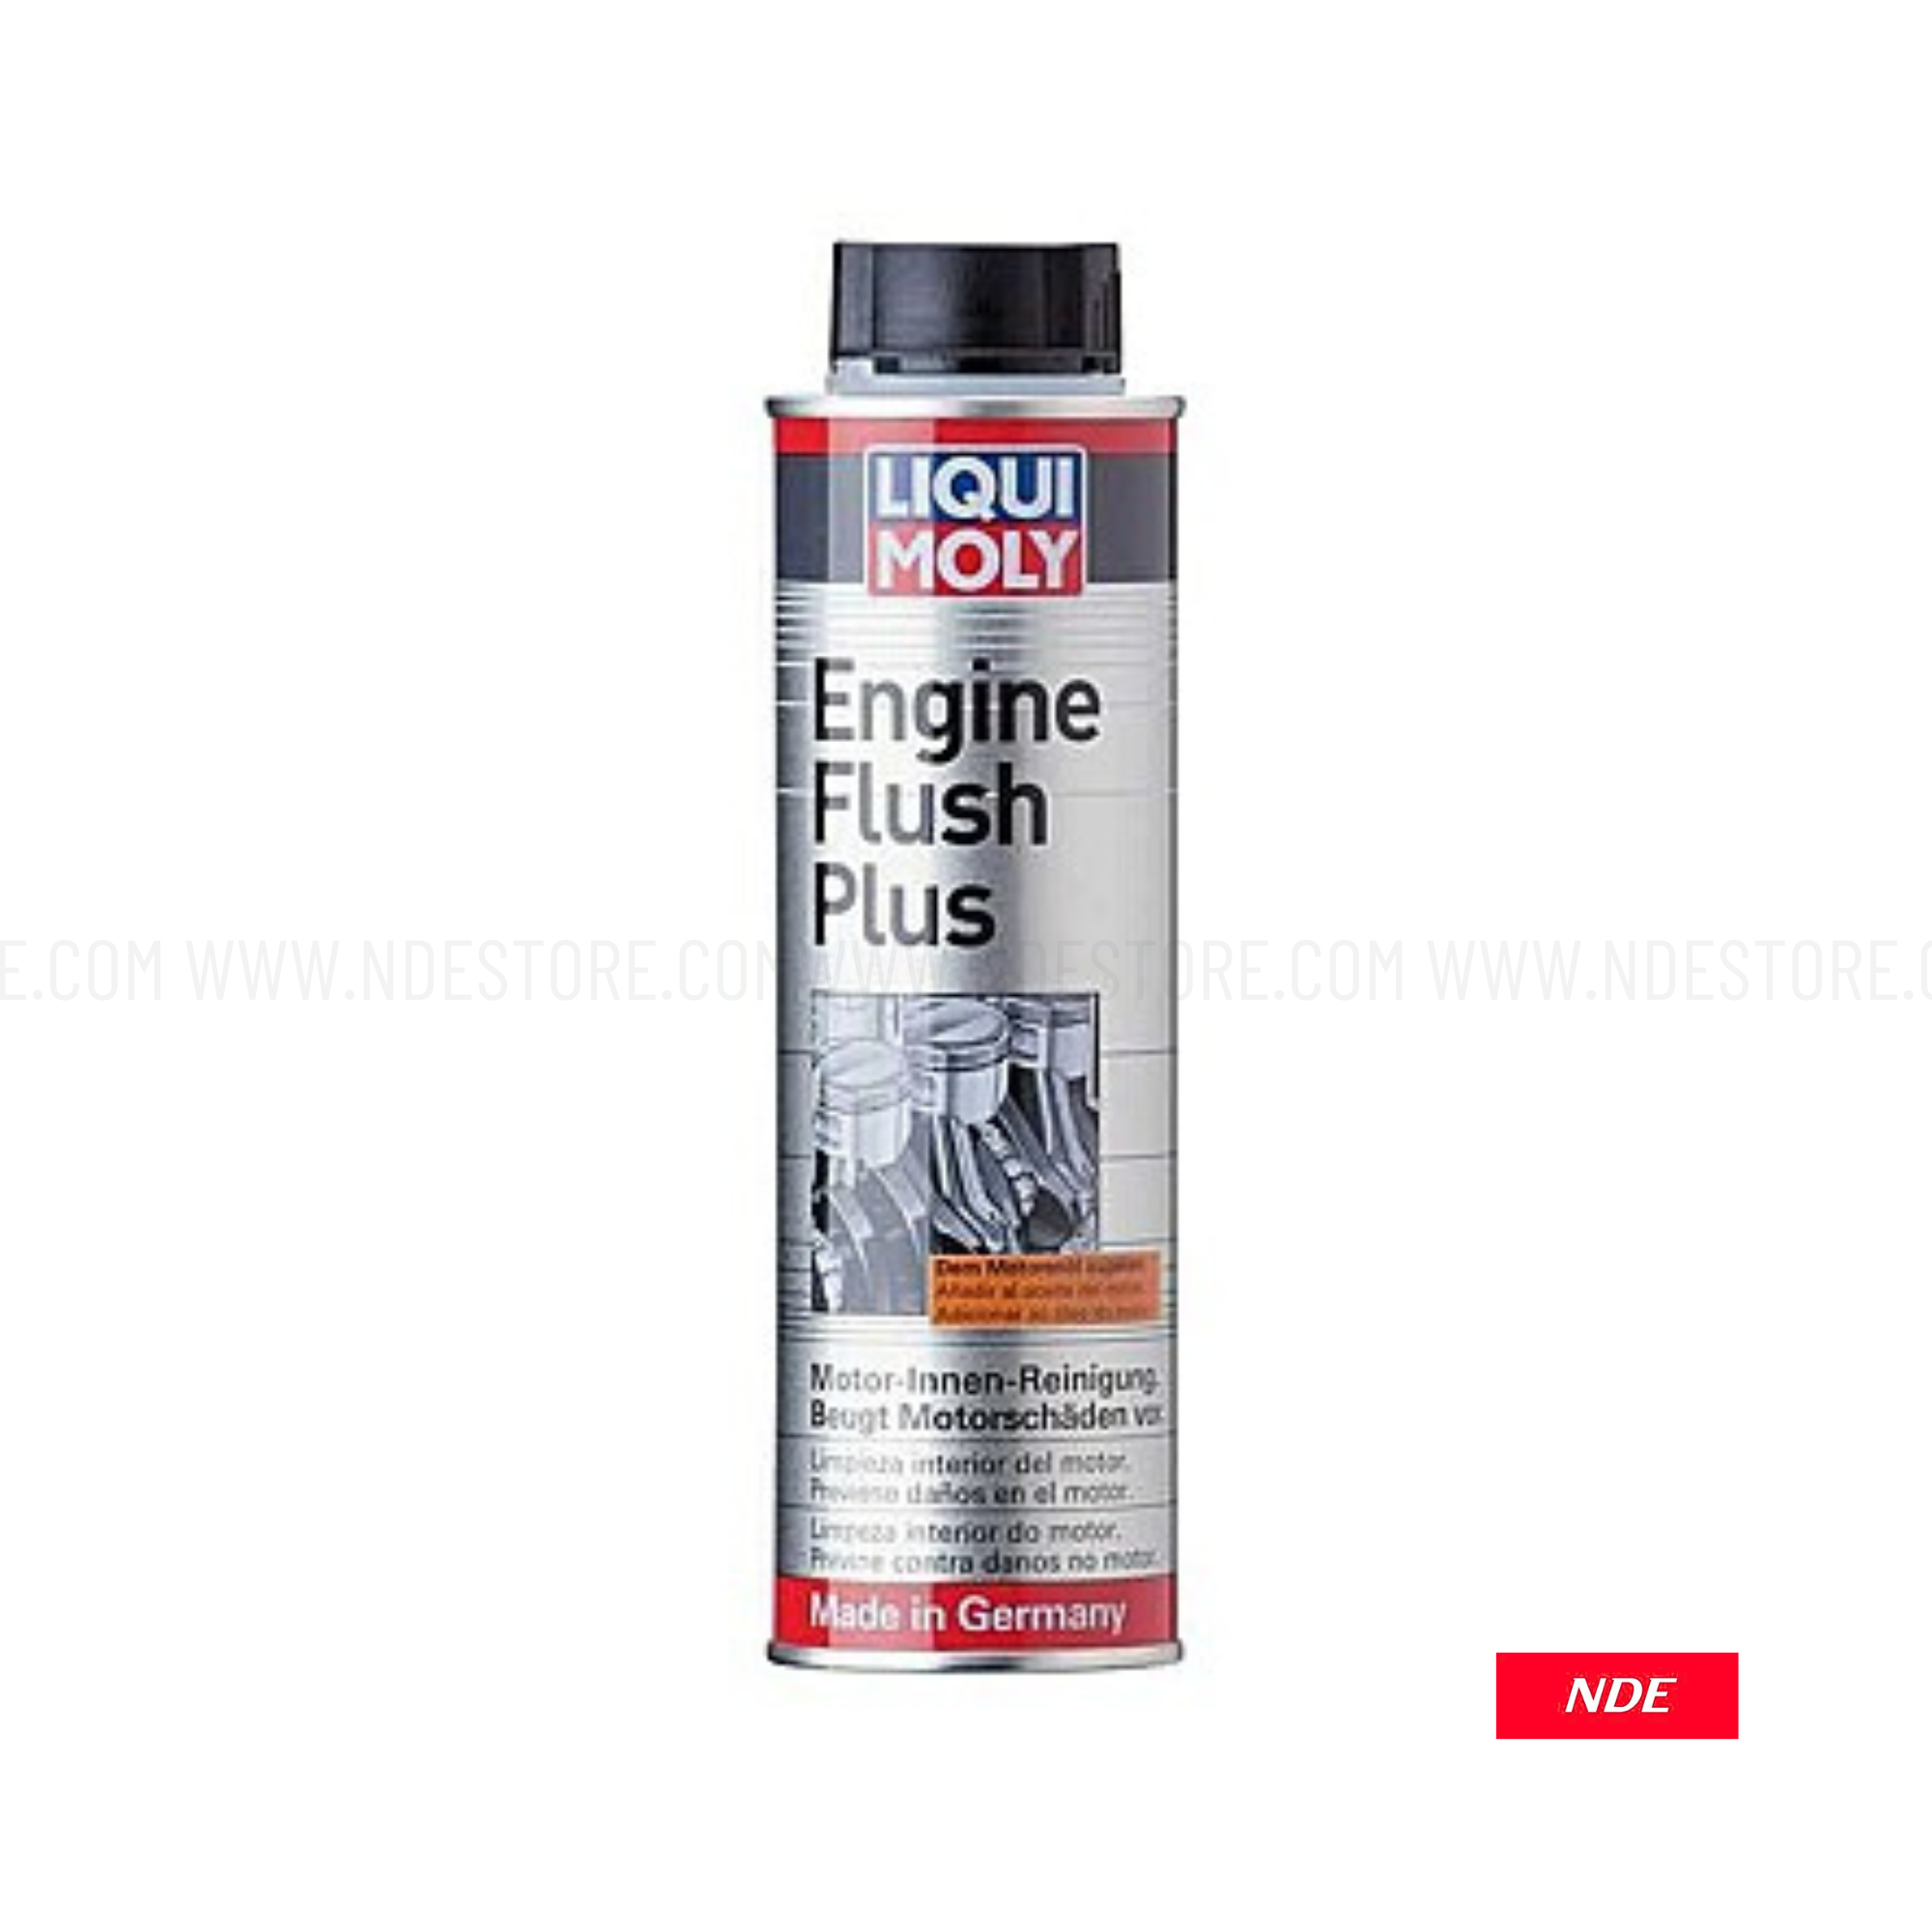 ENGINE FLUSH PLUS - LIQUI MOLY